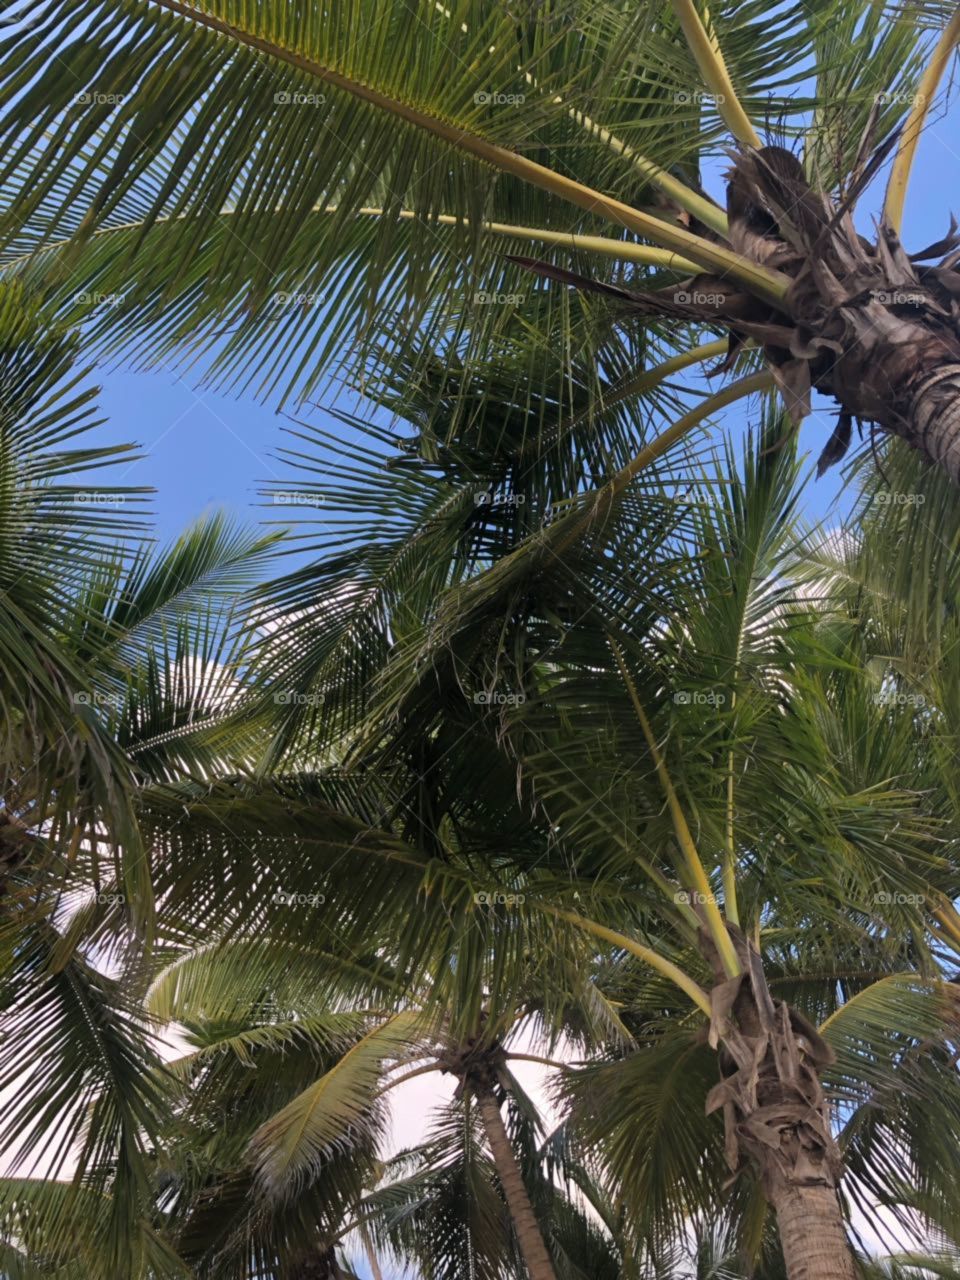 Palms are everywhere!